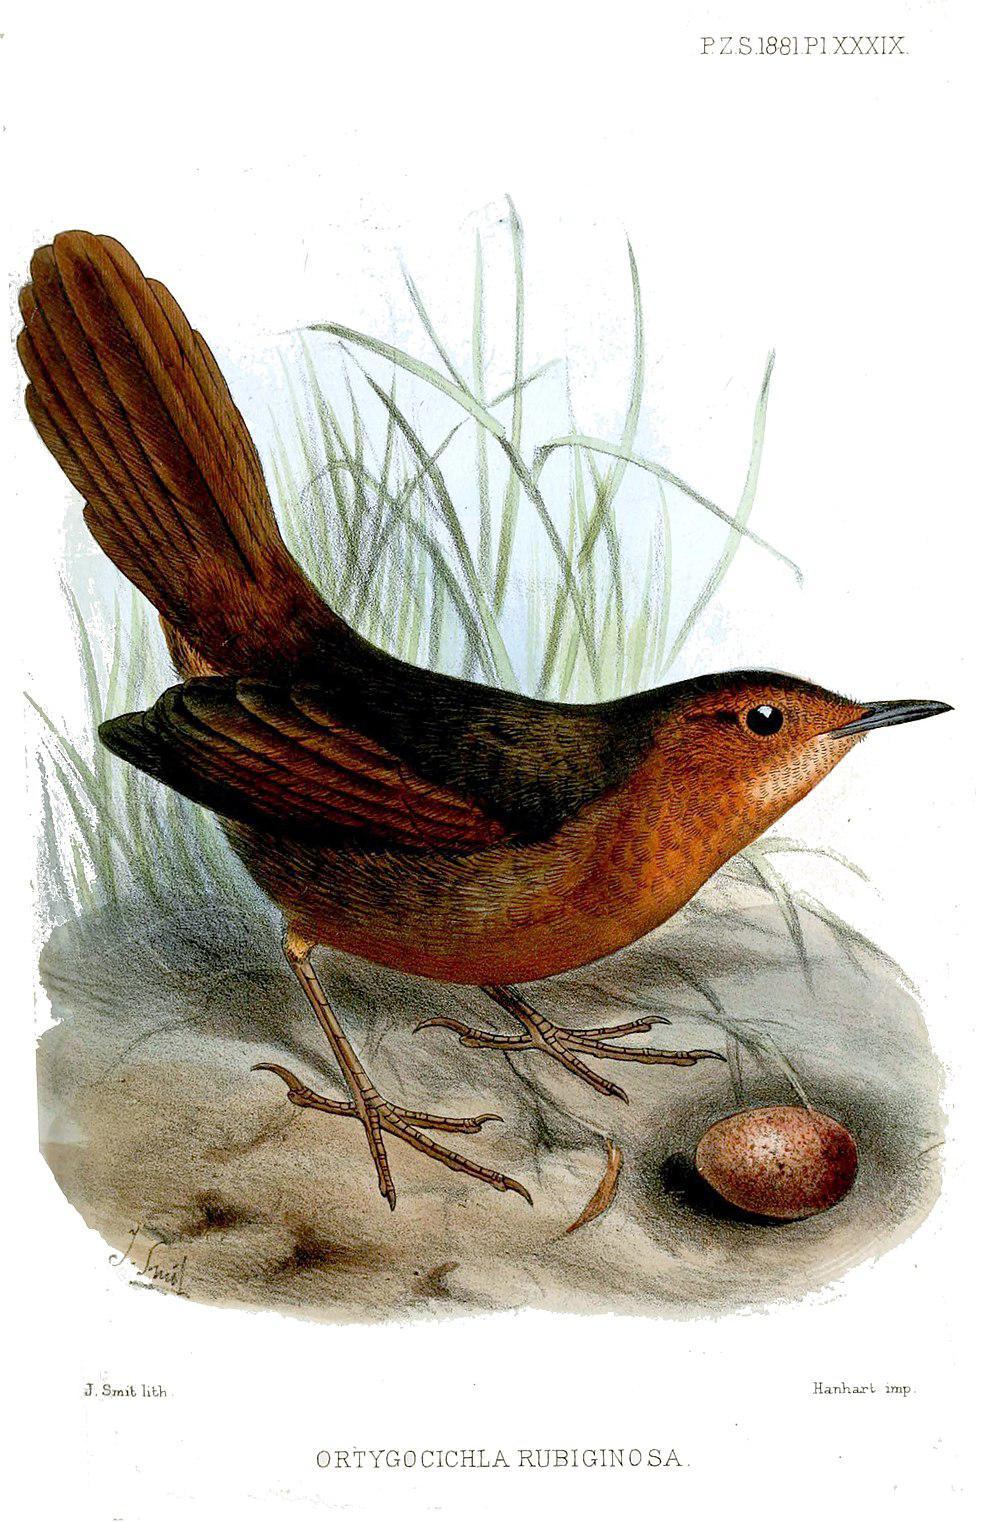 锈色草莺 / Rusty Thicketbird / Cincloramphus rubiginosus